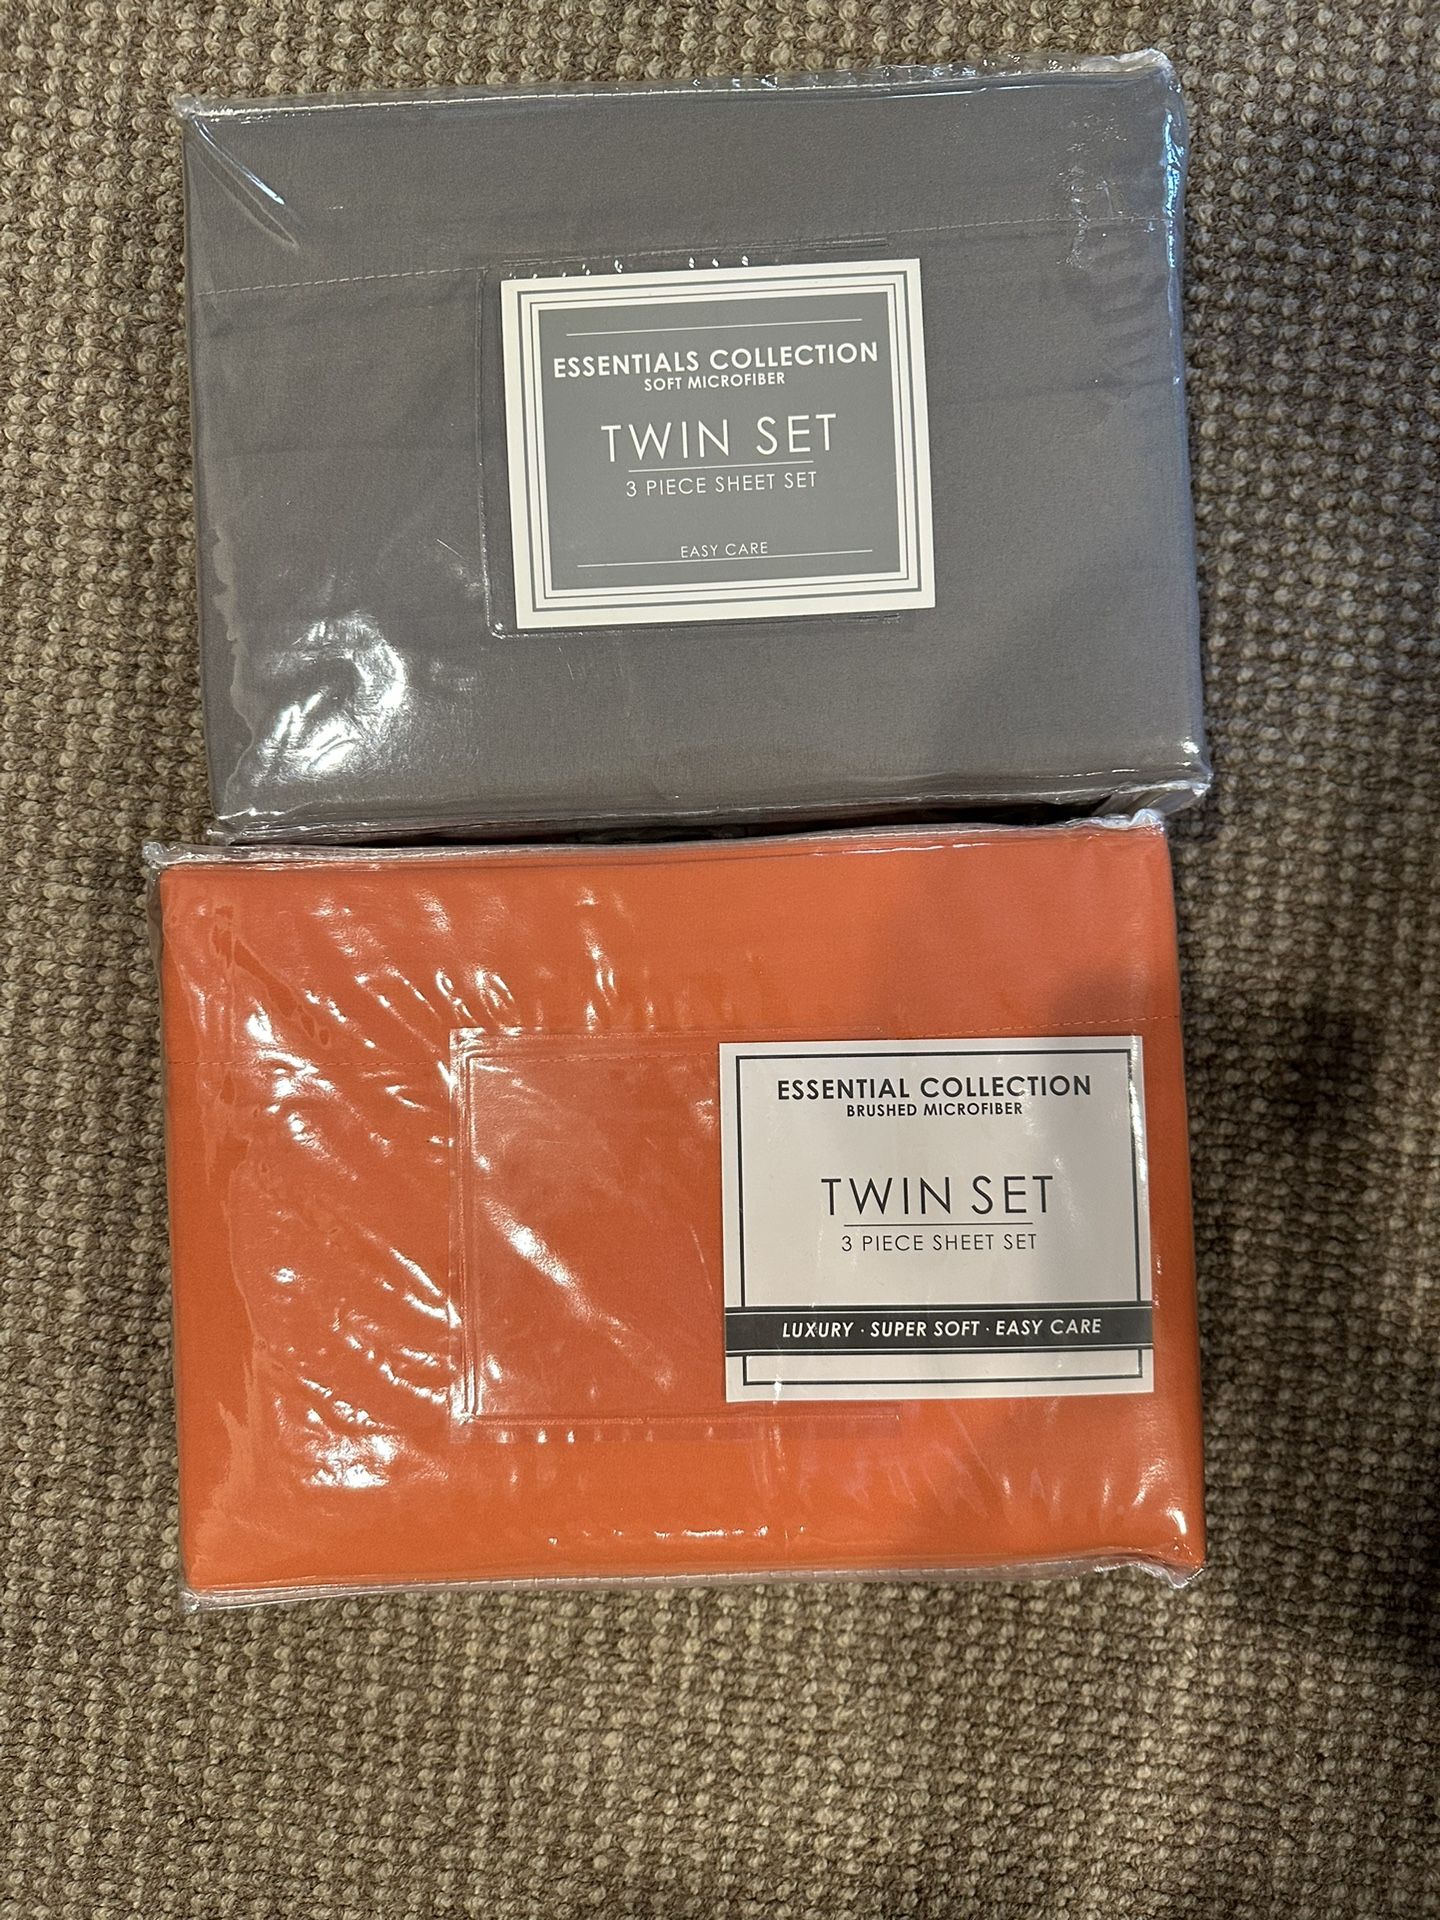 2 Sets of Twin Sheets Gray Set, Orange Set Brand New